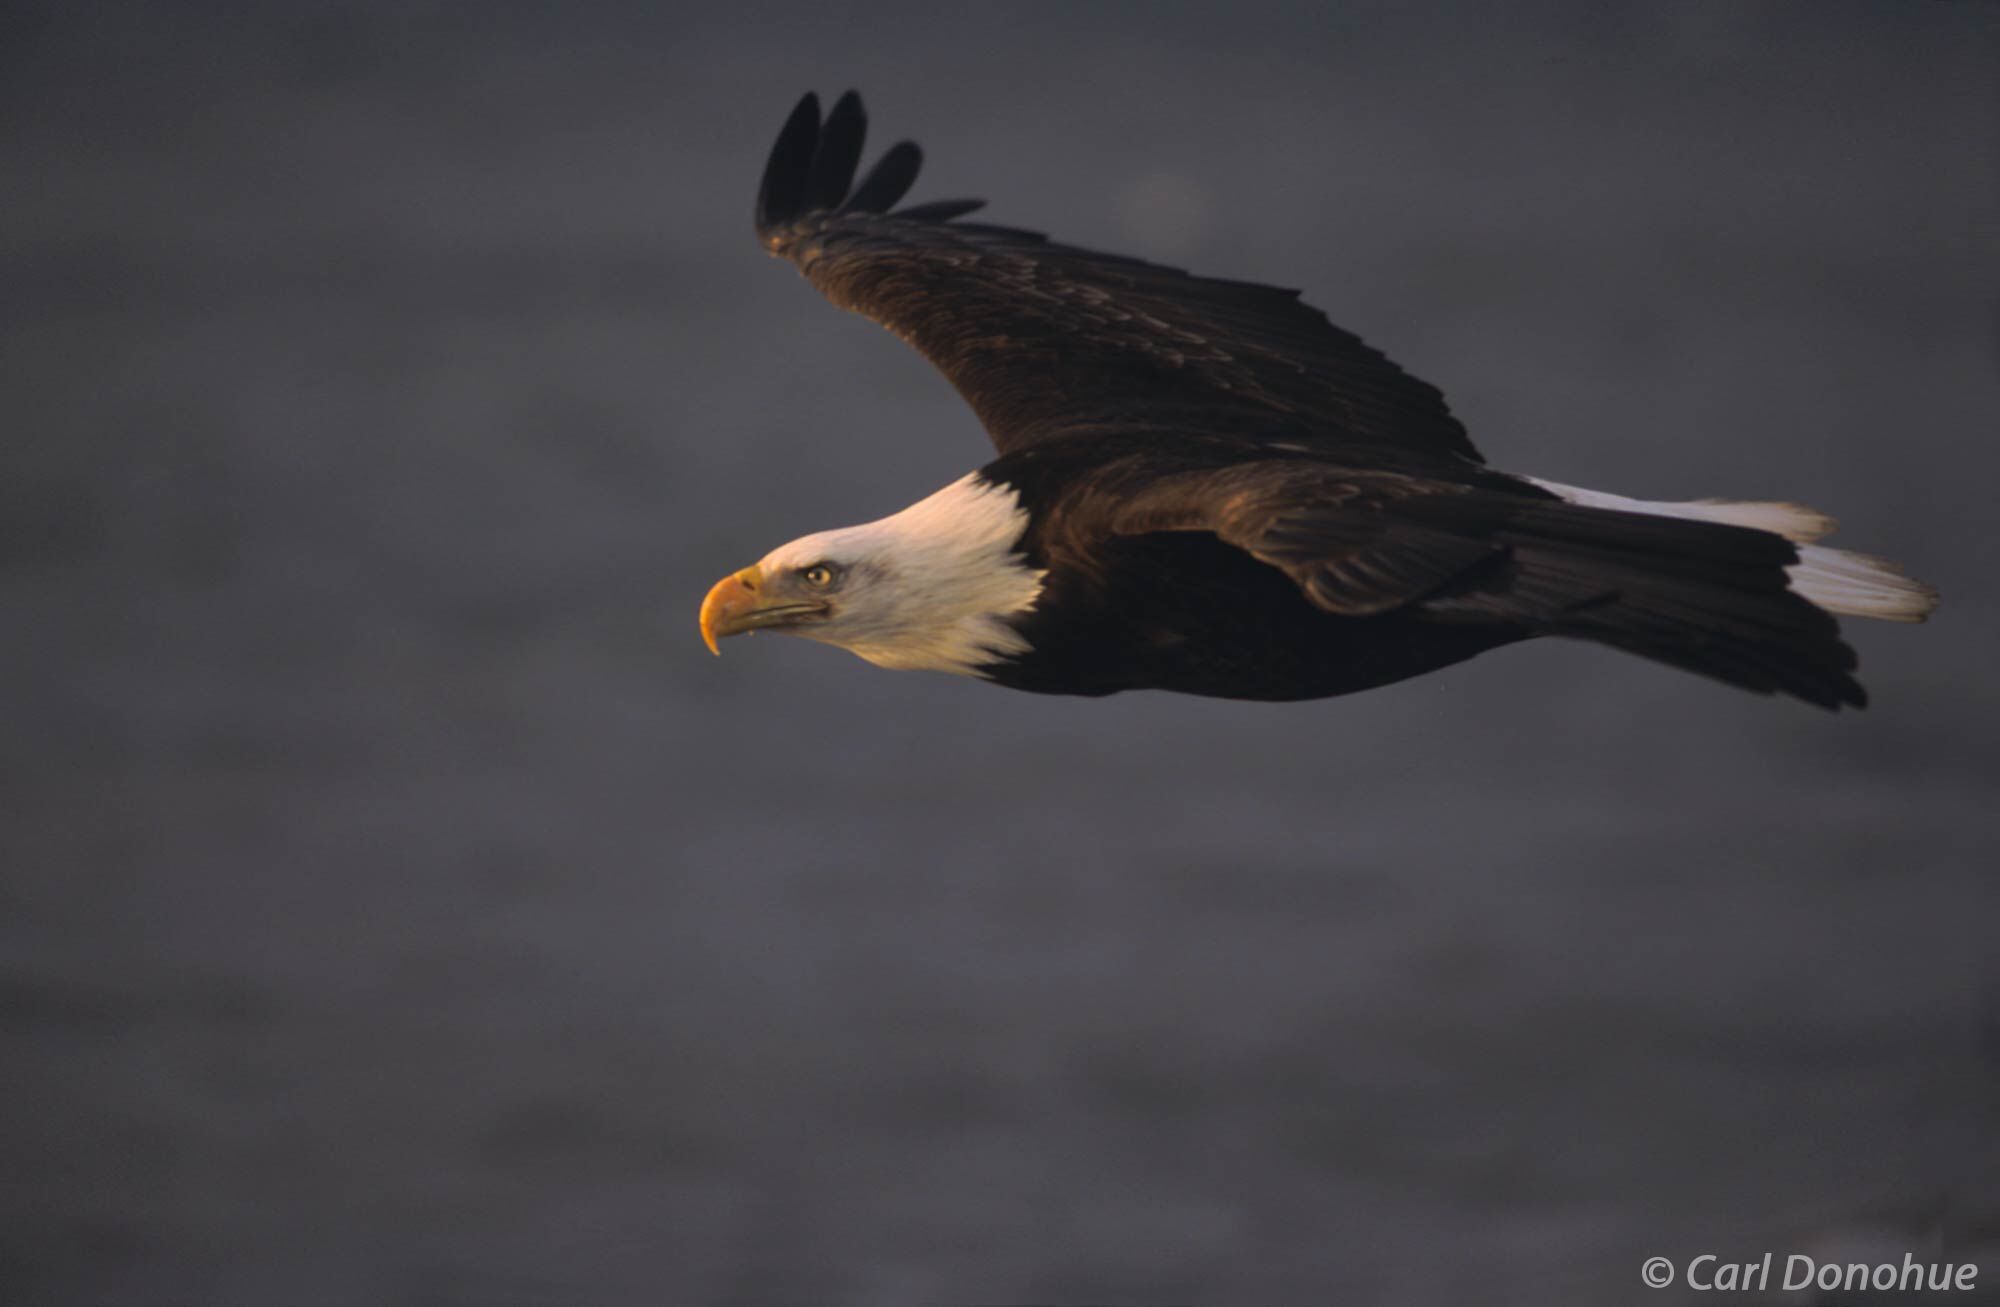 Adult bald eagle soaring over Kachemak Bay, Alaska. (Haliaeetus leucocephalus). Soaring eagles pictures. The bald eagle's strong...